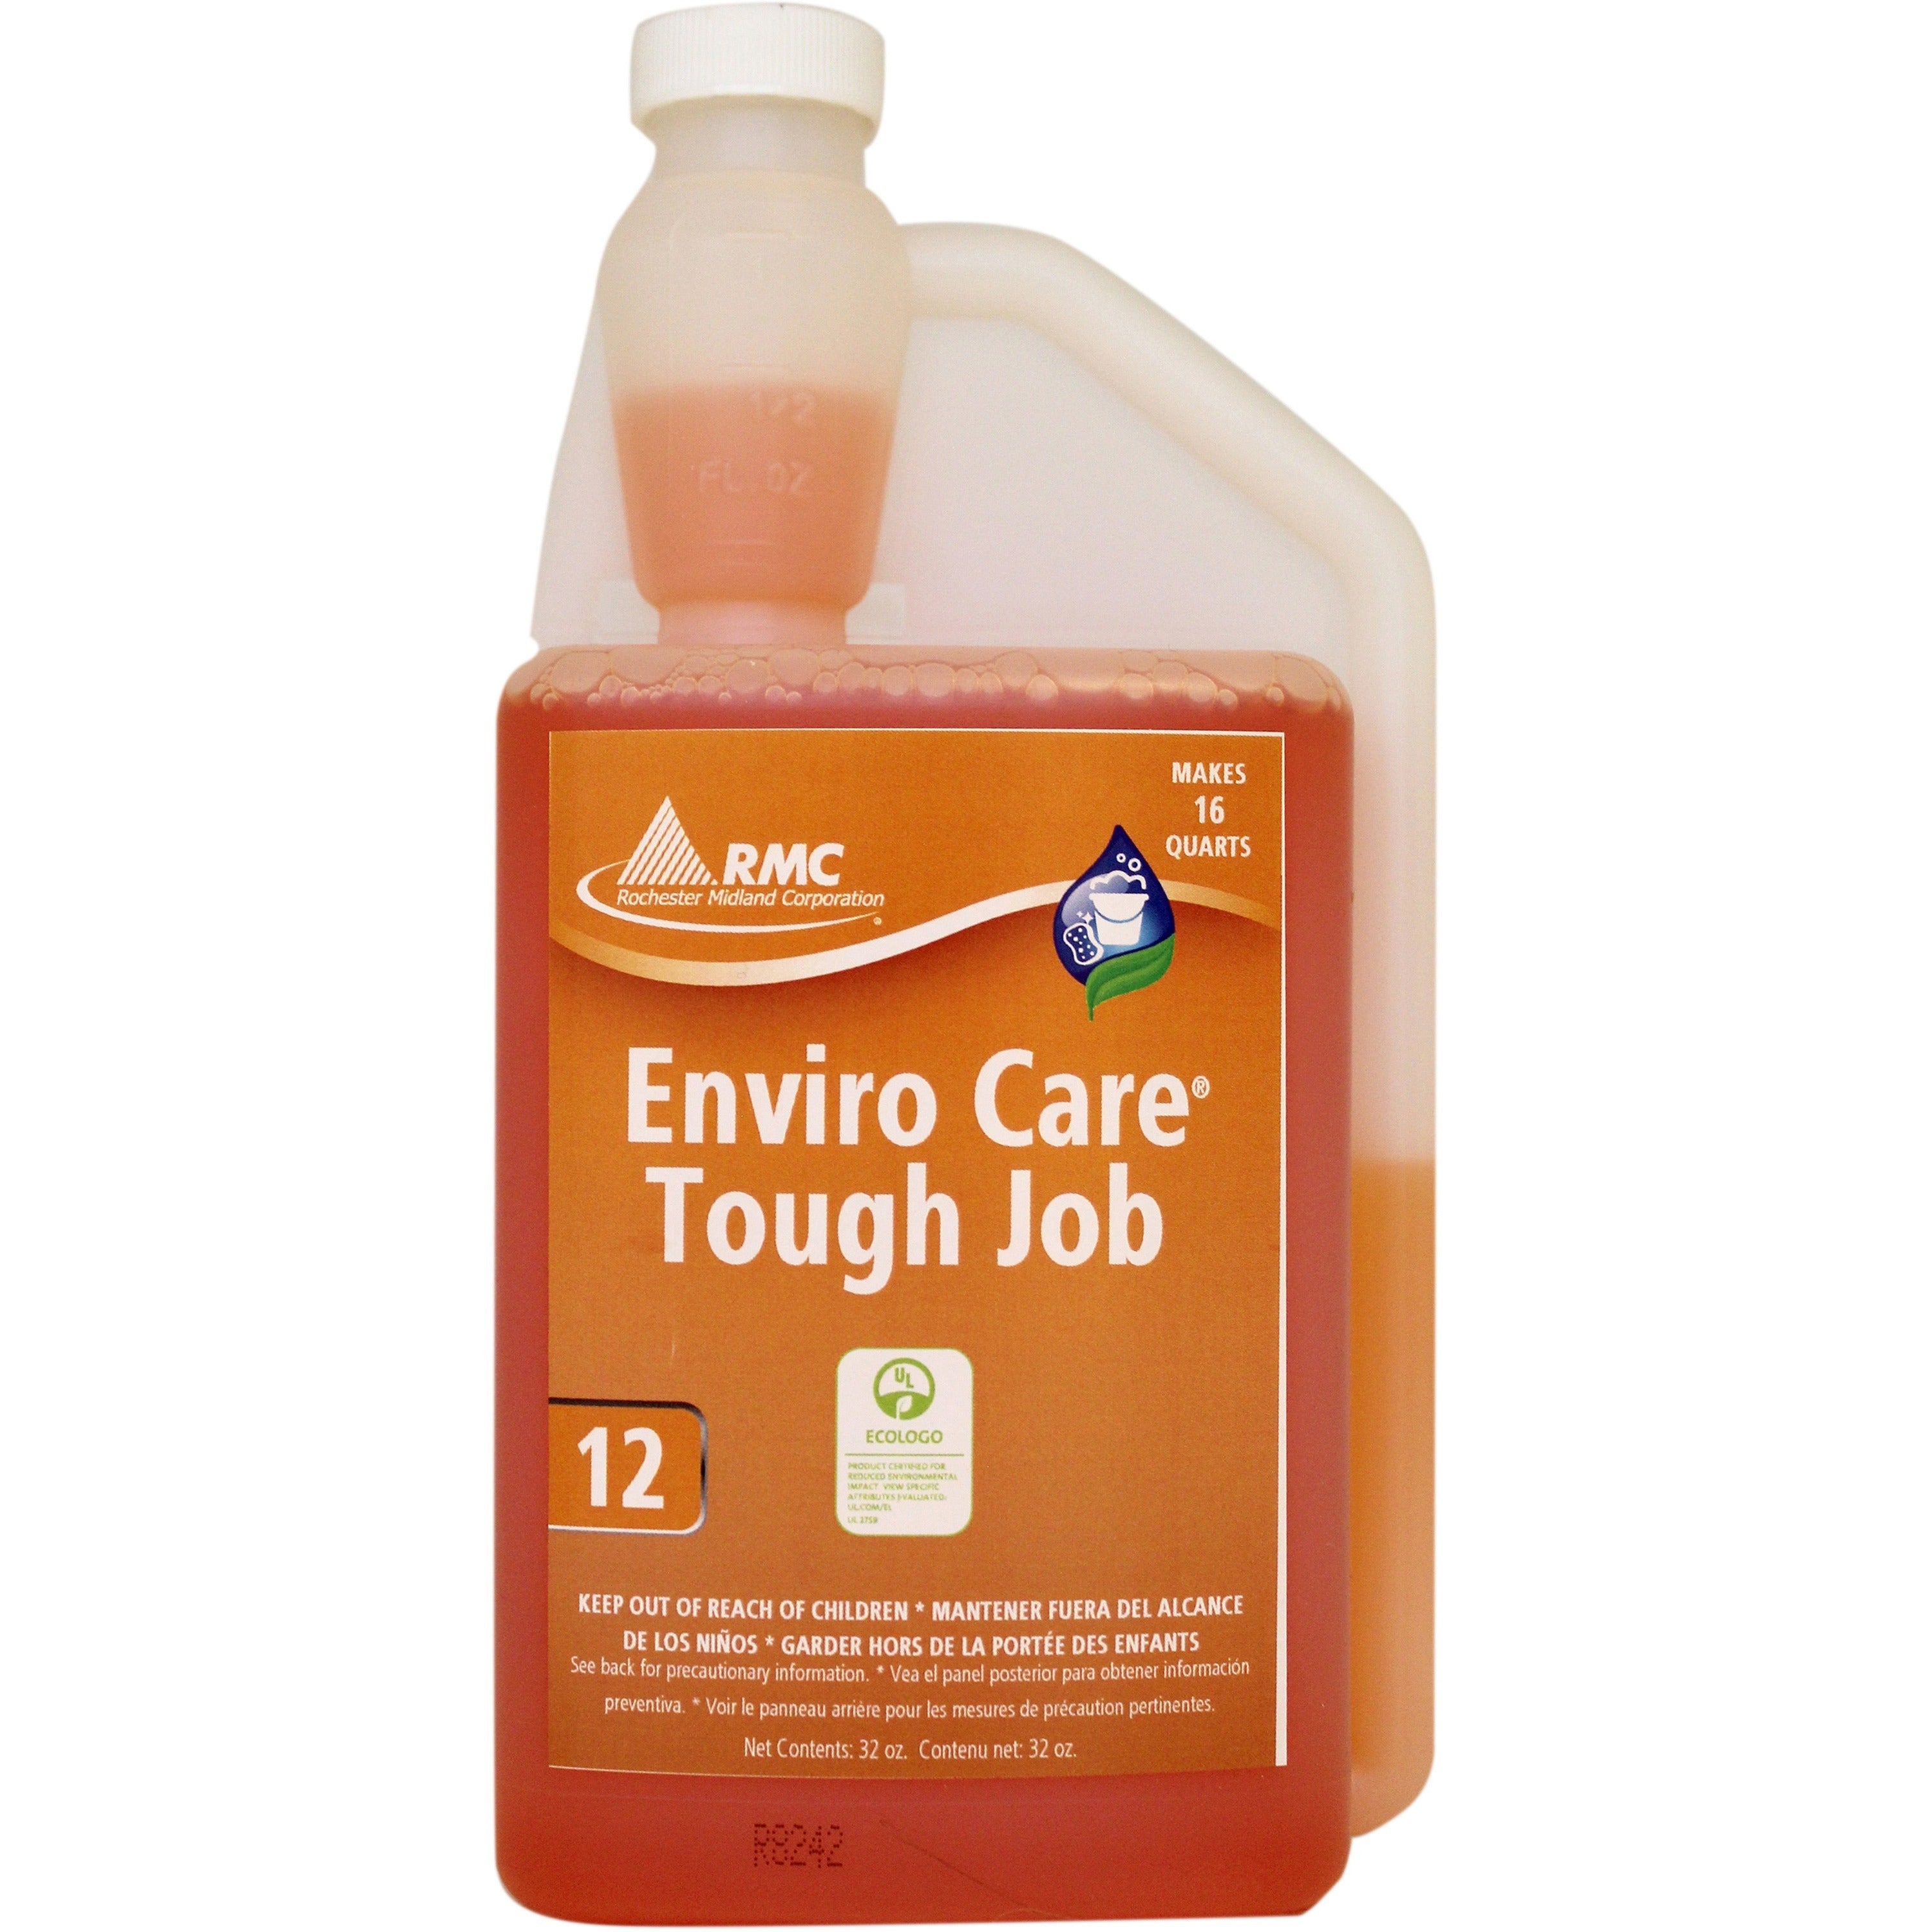 RMC Enviro Care Tough Job Cleaner - For Wall, Floor, Machinery - 32 fl oz (1 quart) - 1 Each - Heavy Duty, Bio-based, Dilutable - Orange - 